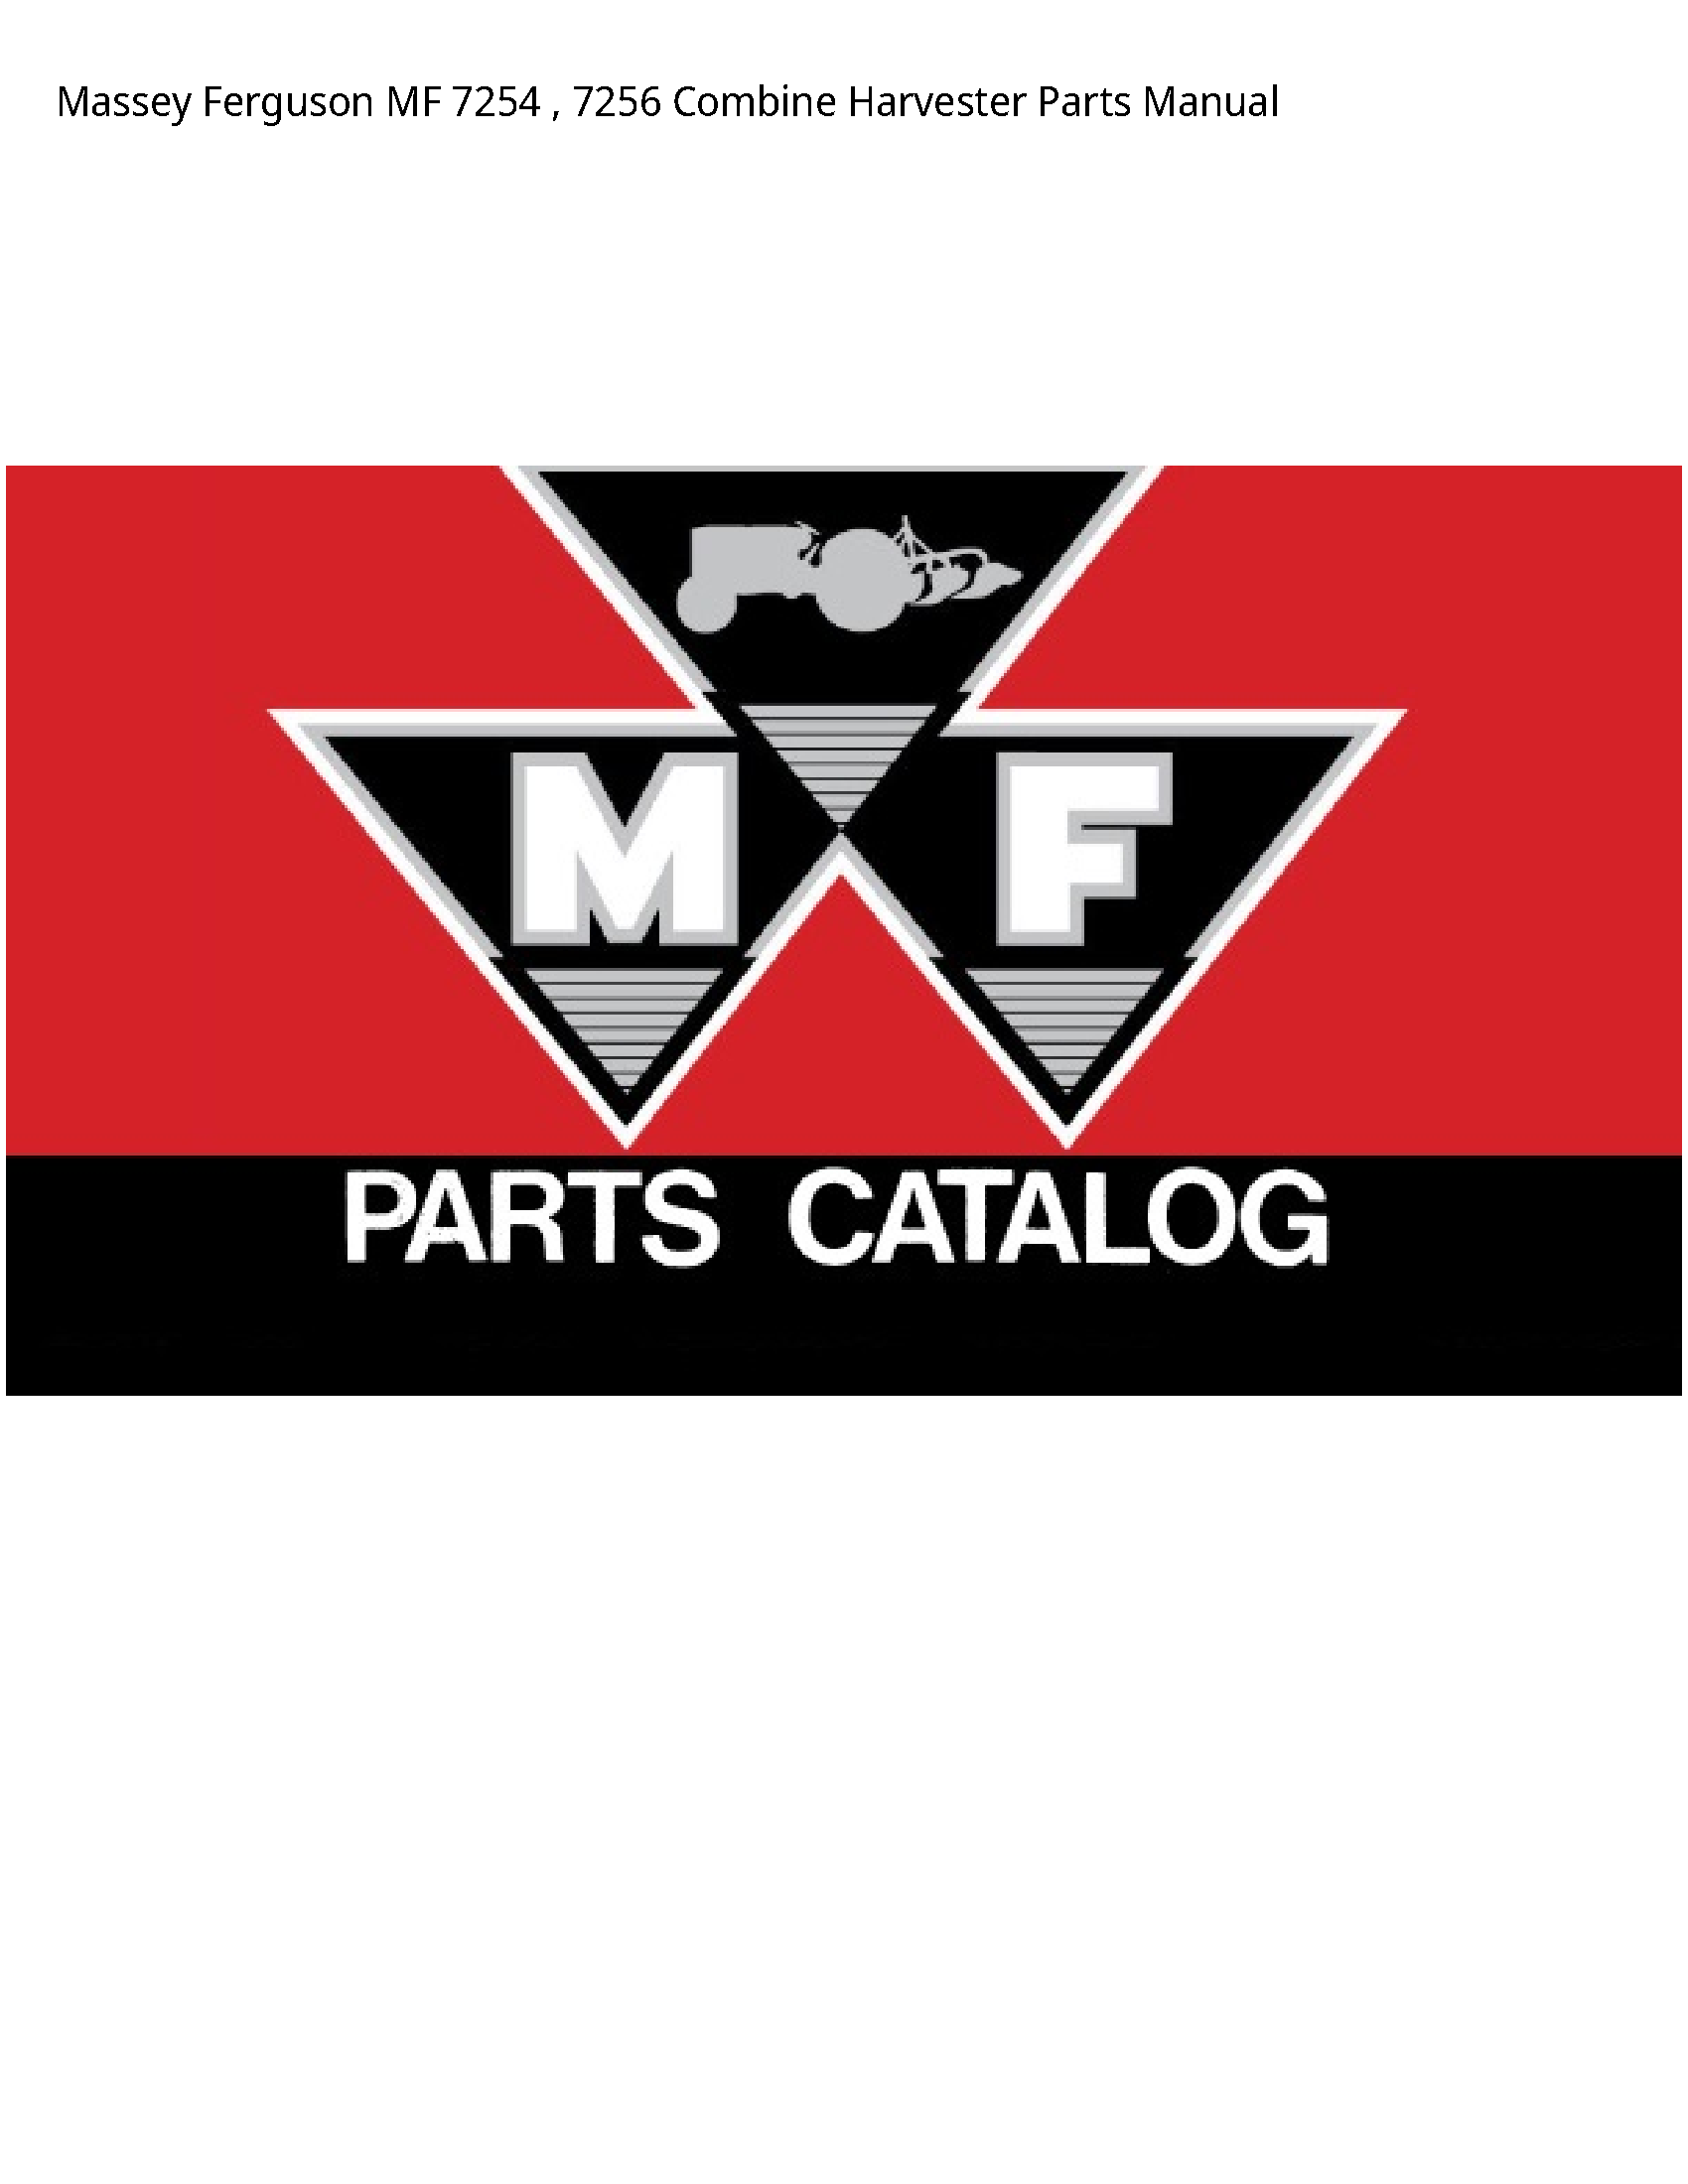 Massey Ferguson 7254 MF Combine Harvester Parts manual